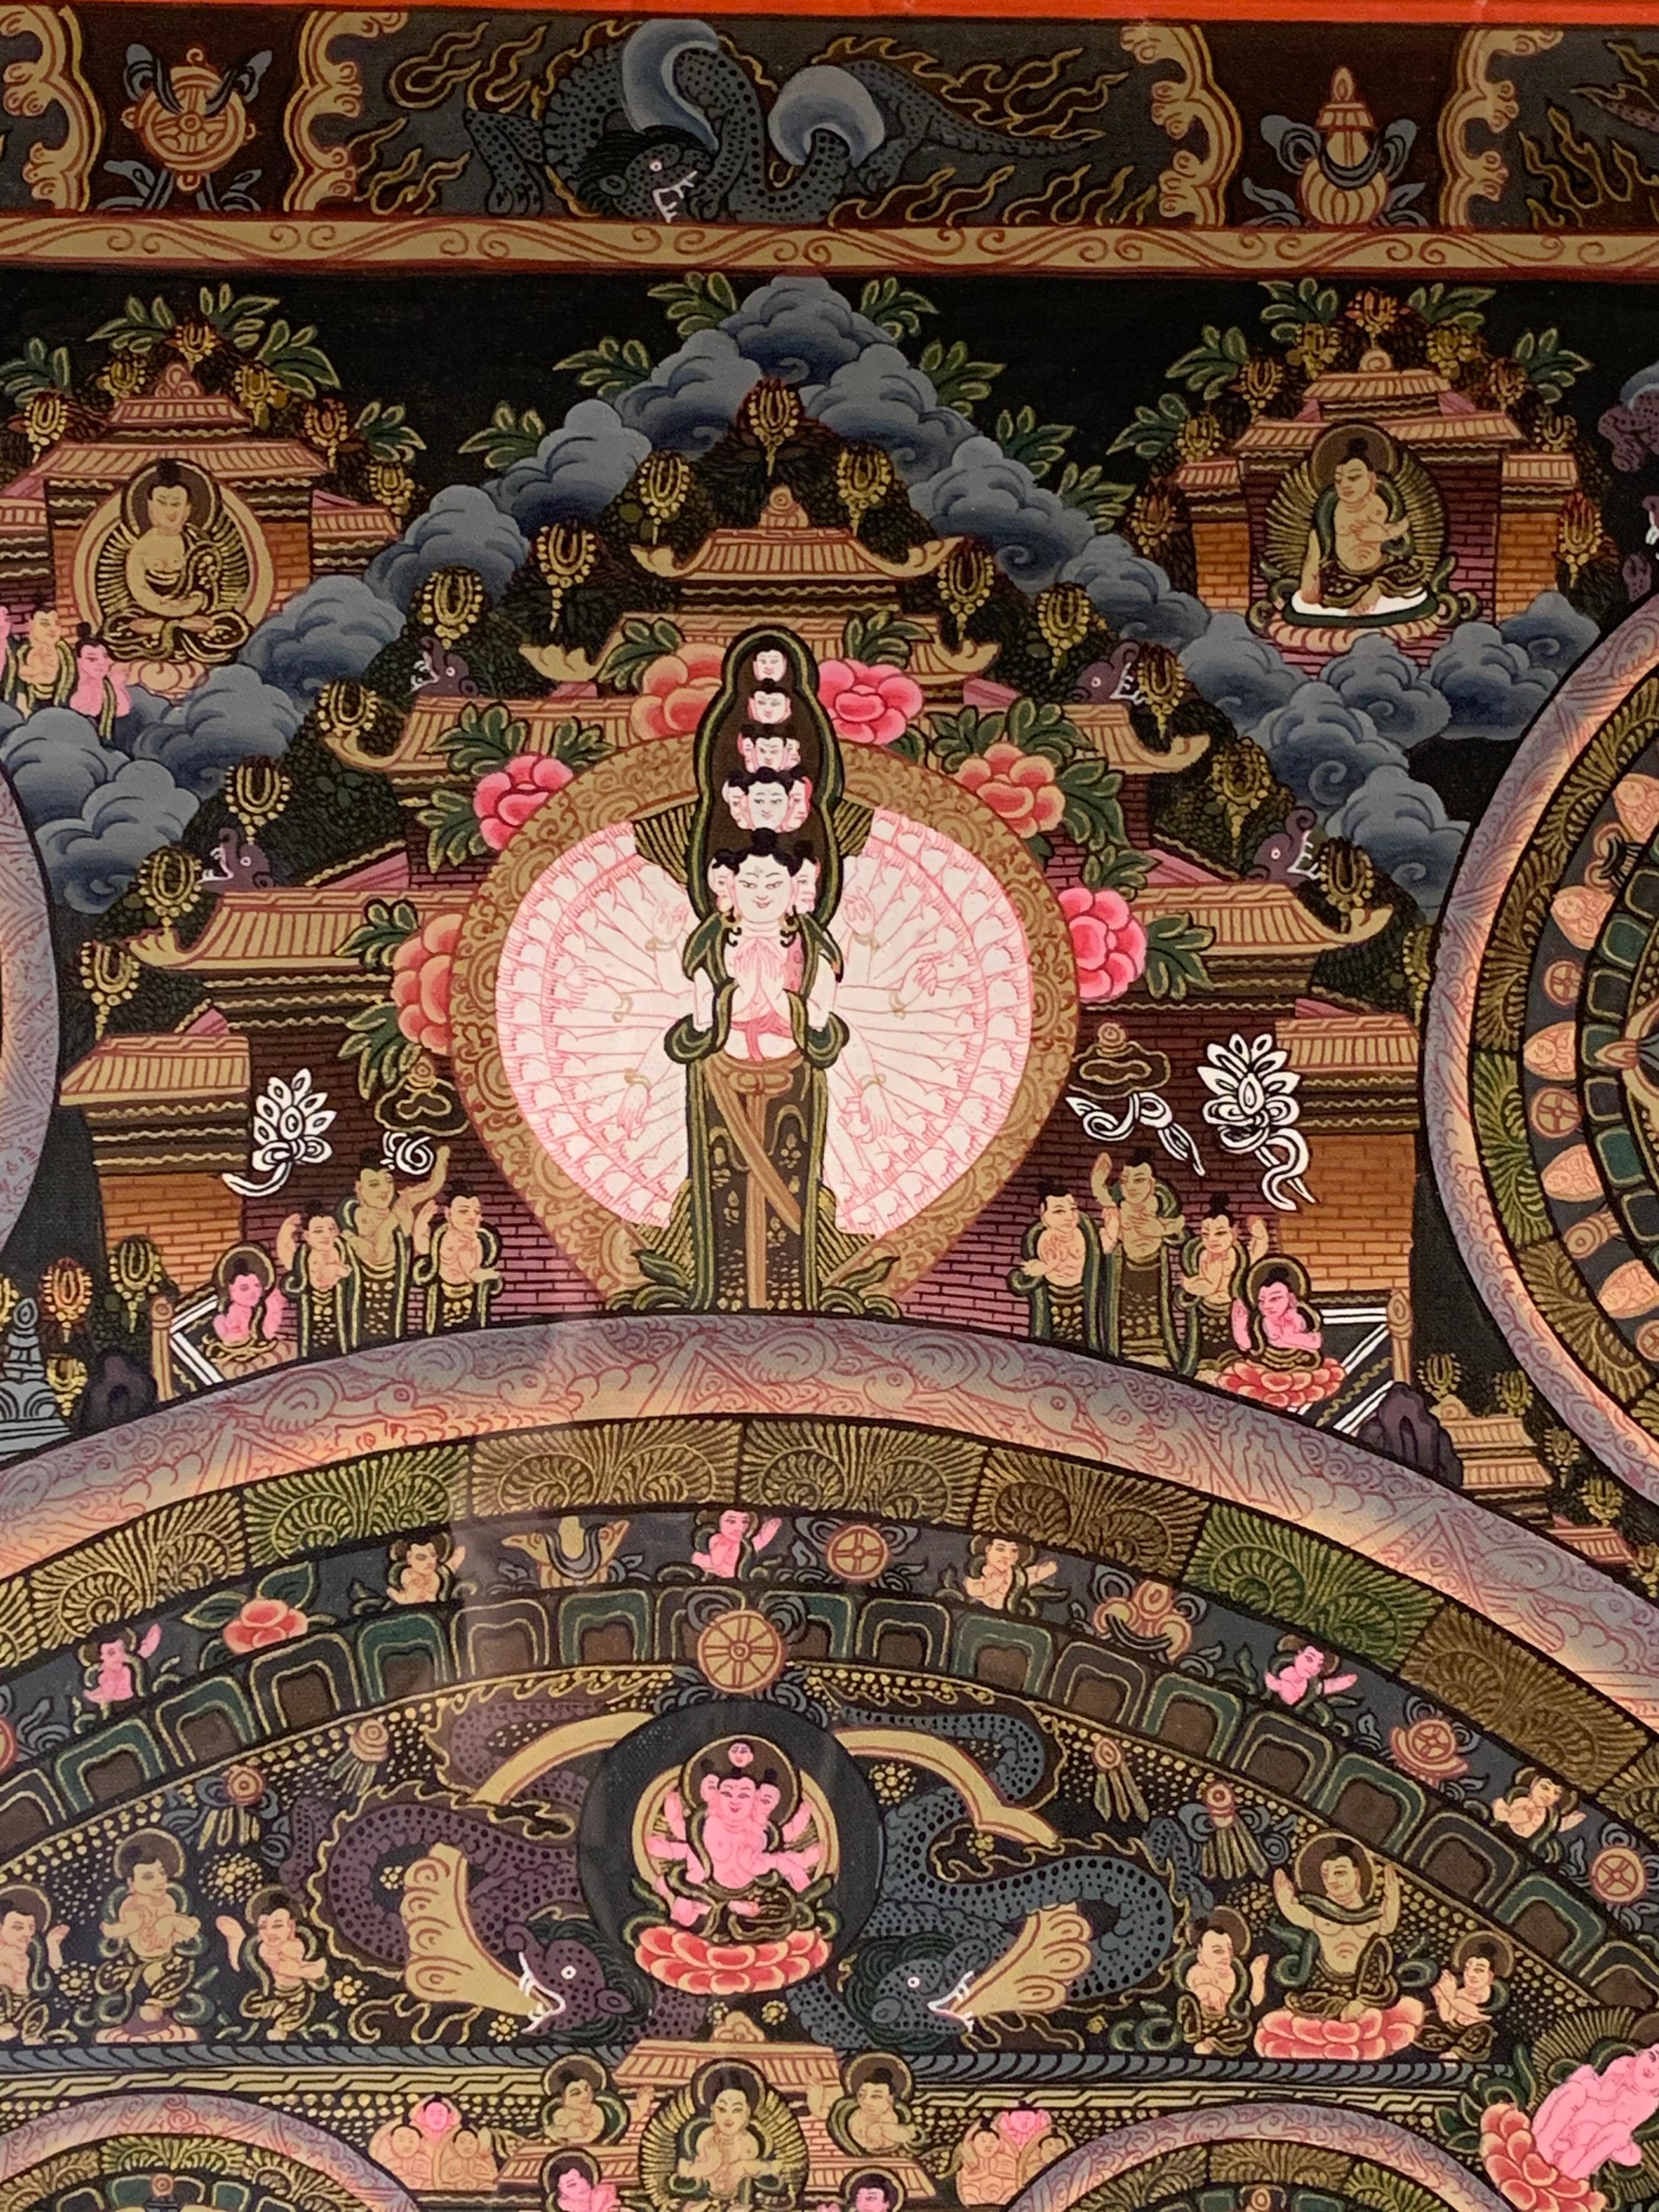 Framed Original Hand Painted Meditation Mandala Thangka on Canvas with 24K Gold  For Sale 1